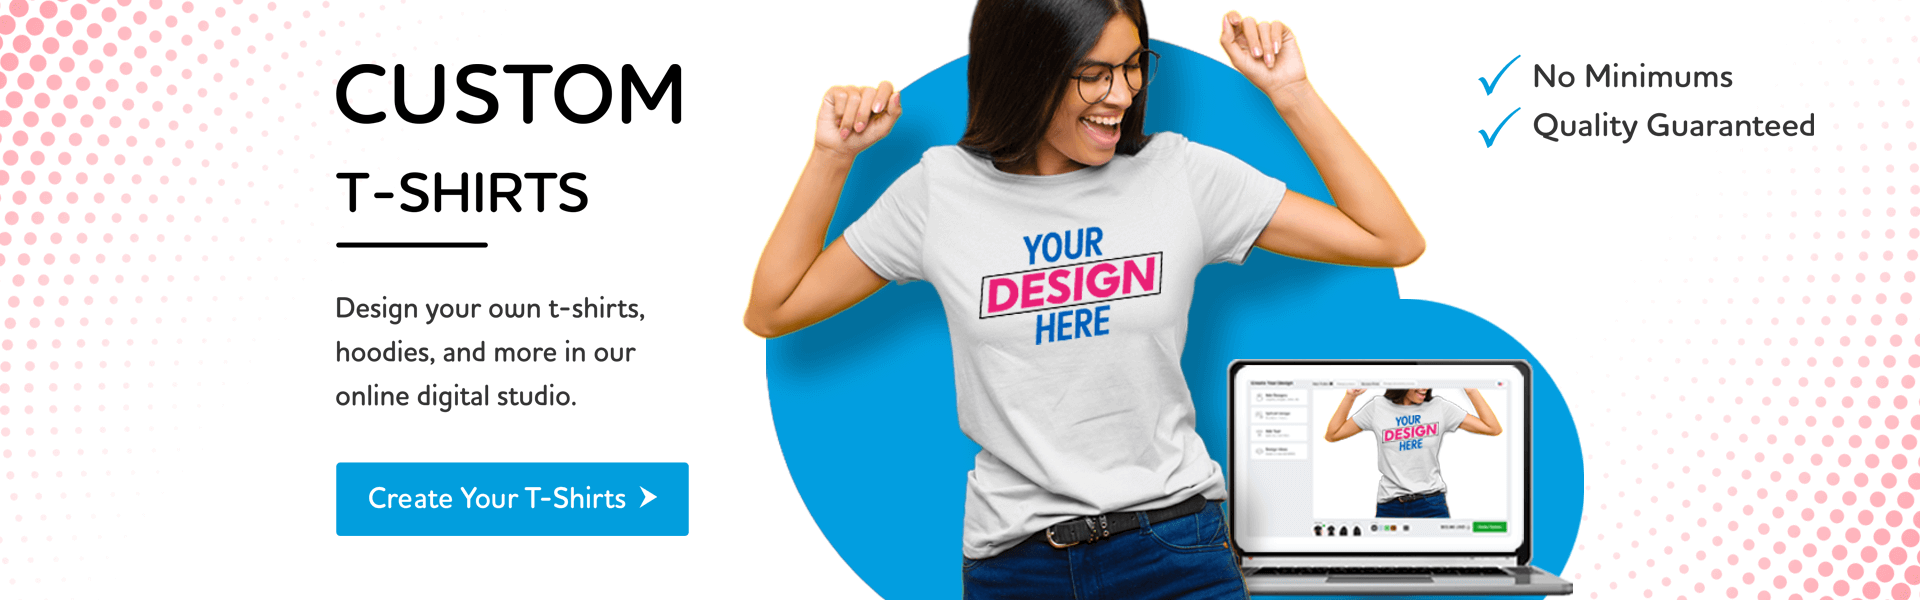 Design Custom T-Shirts Online